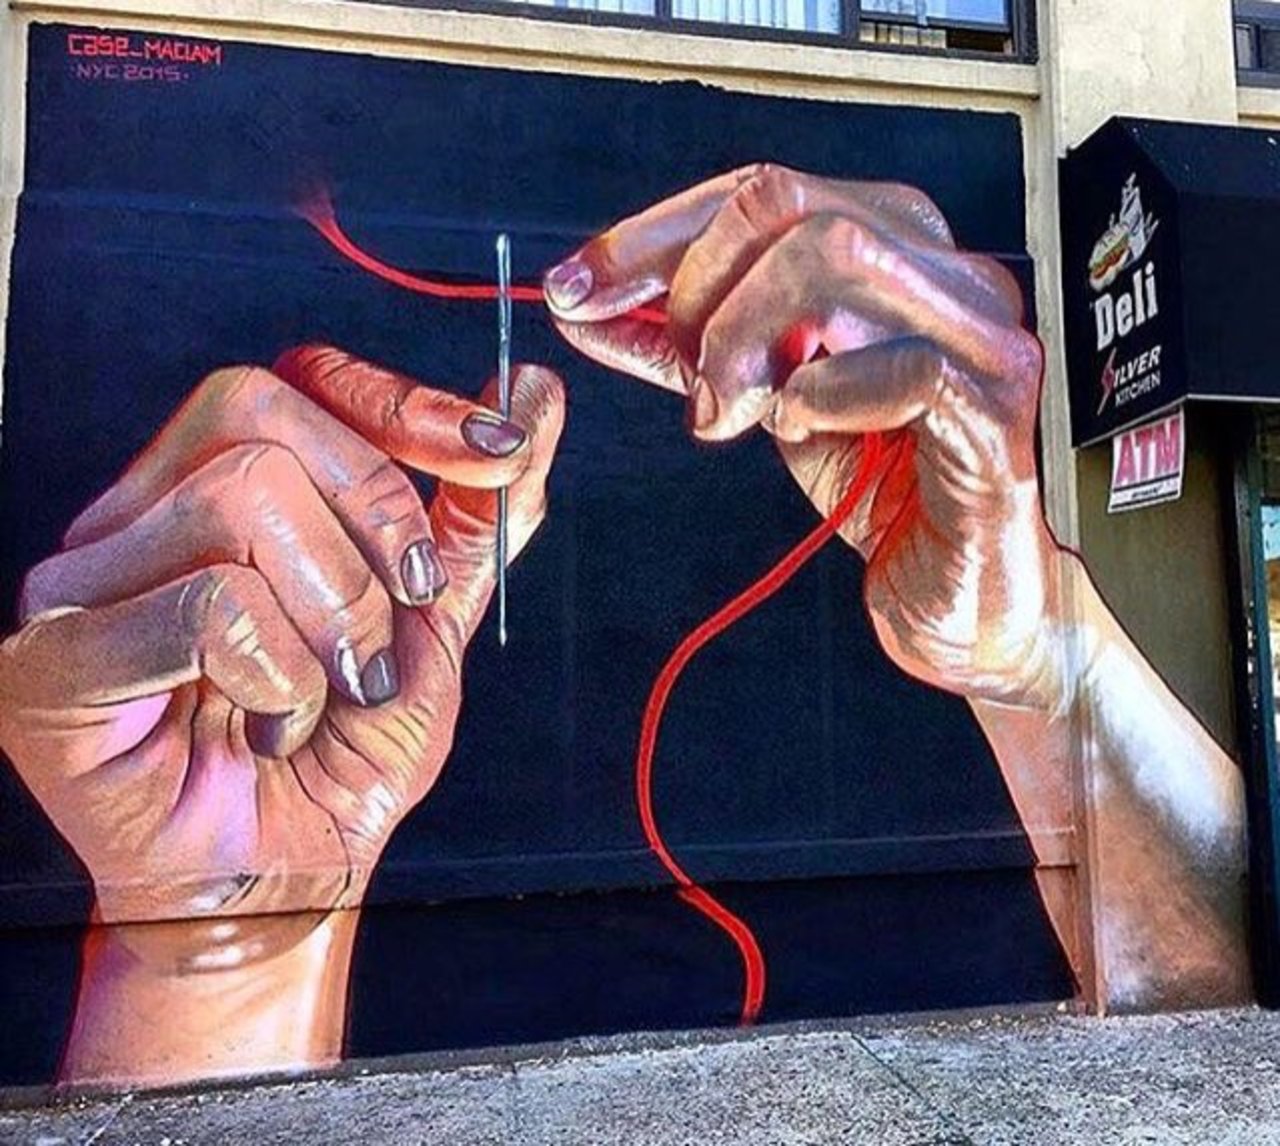 New Street Art by Case Ma'Claim in NYC 

#art #graffiti #mural #streetart https://t.co/3HCxs7kzQT http://fb.me/2oZwCW6ro